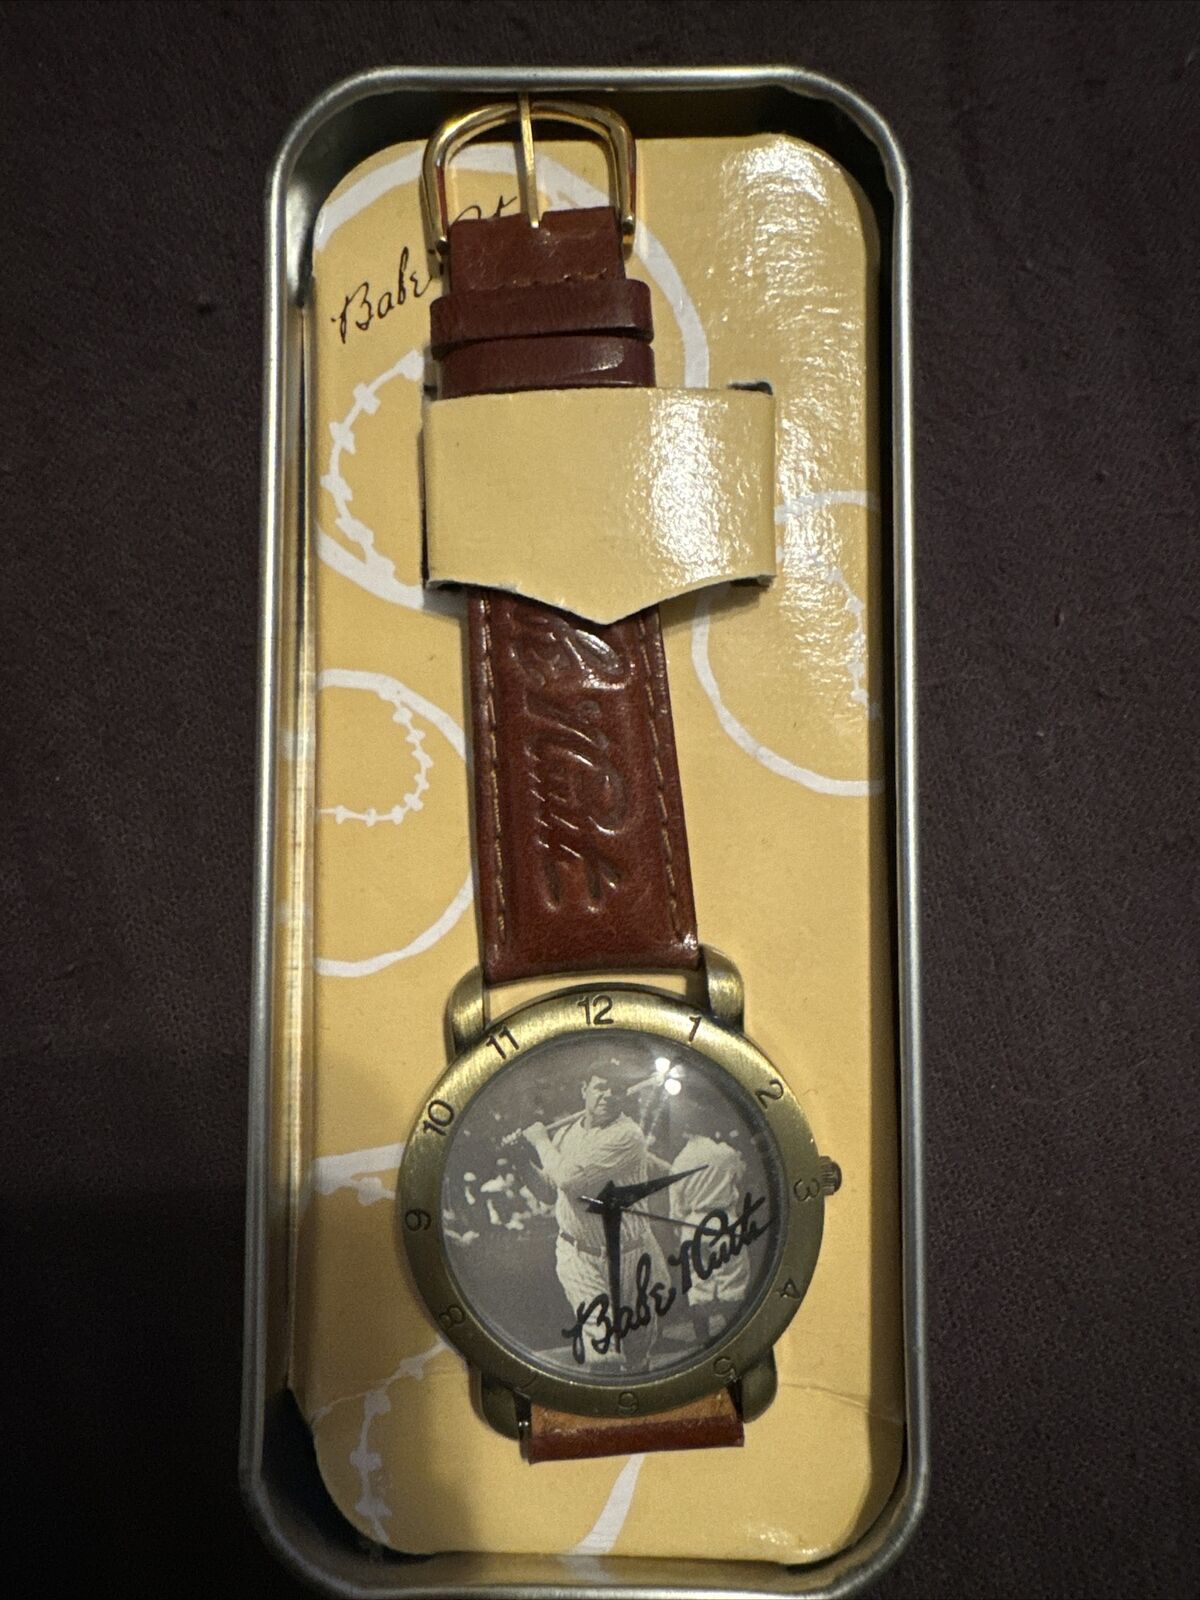 Babe Ruth '100th Anniversary' WALTHAM Quartz Wristwatch in Commemorative Tin